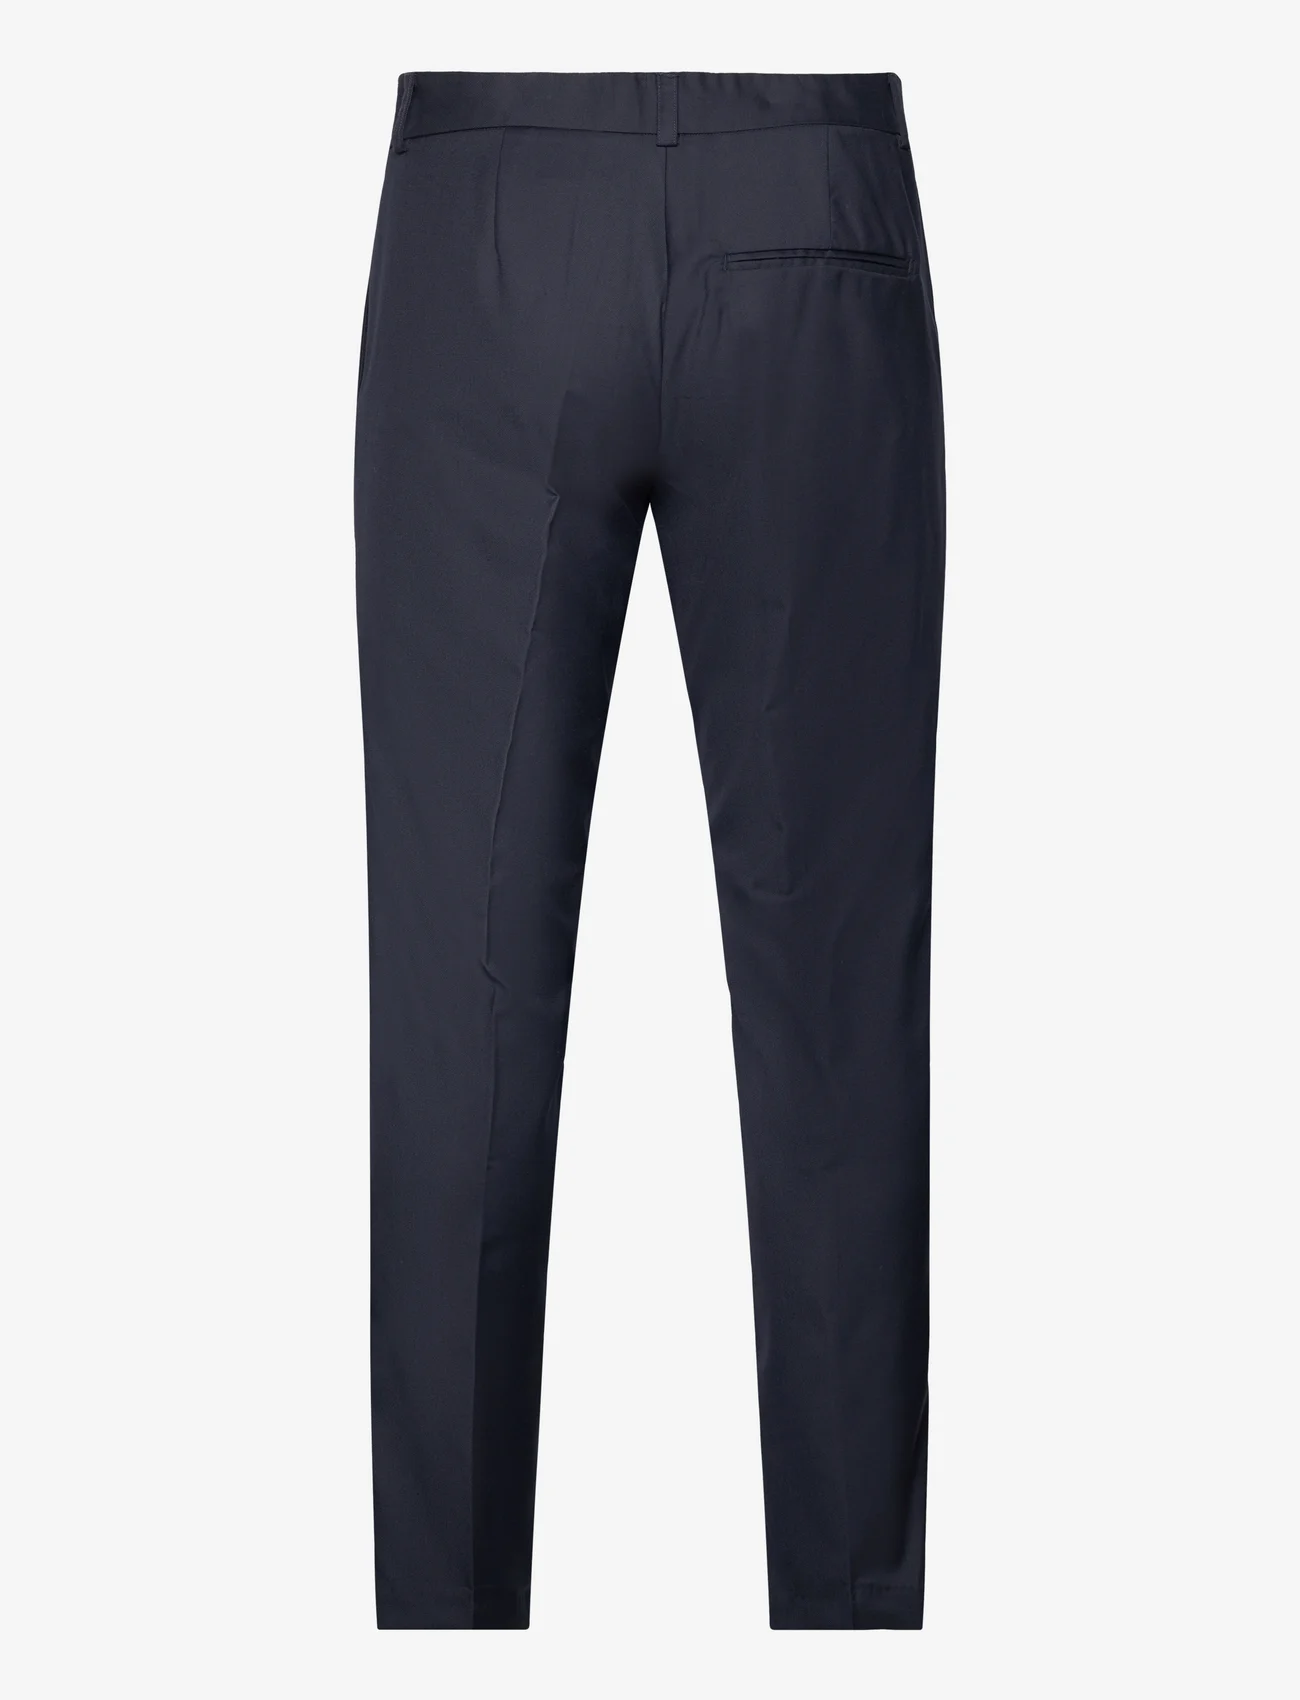 Bruuns Bazaar - MicksBBDagger pants - pantalons - navy - 1